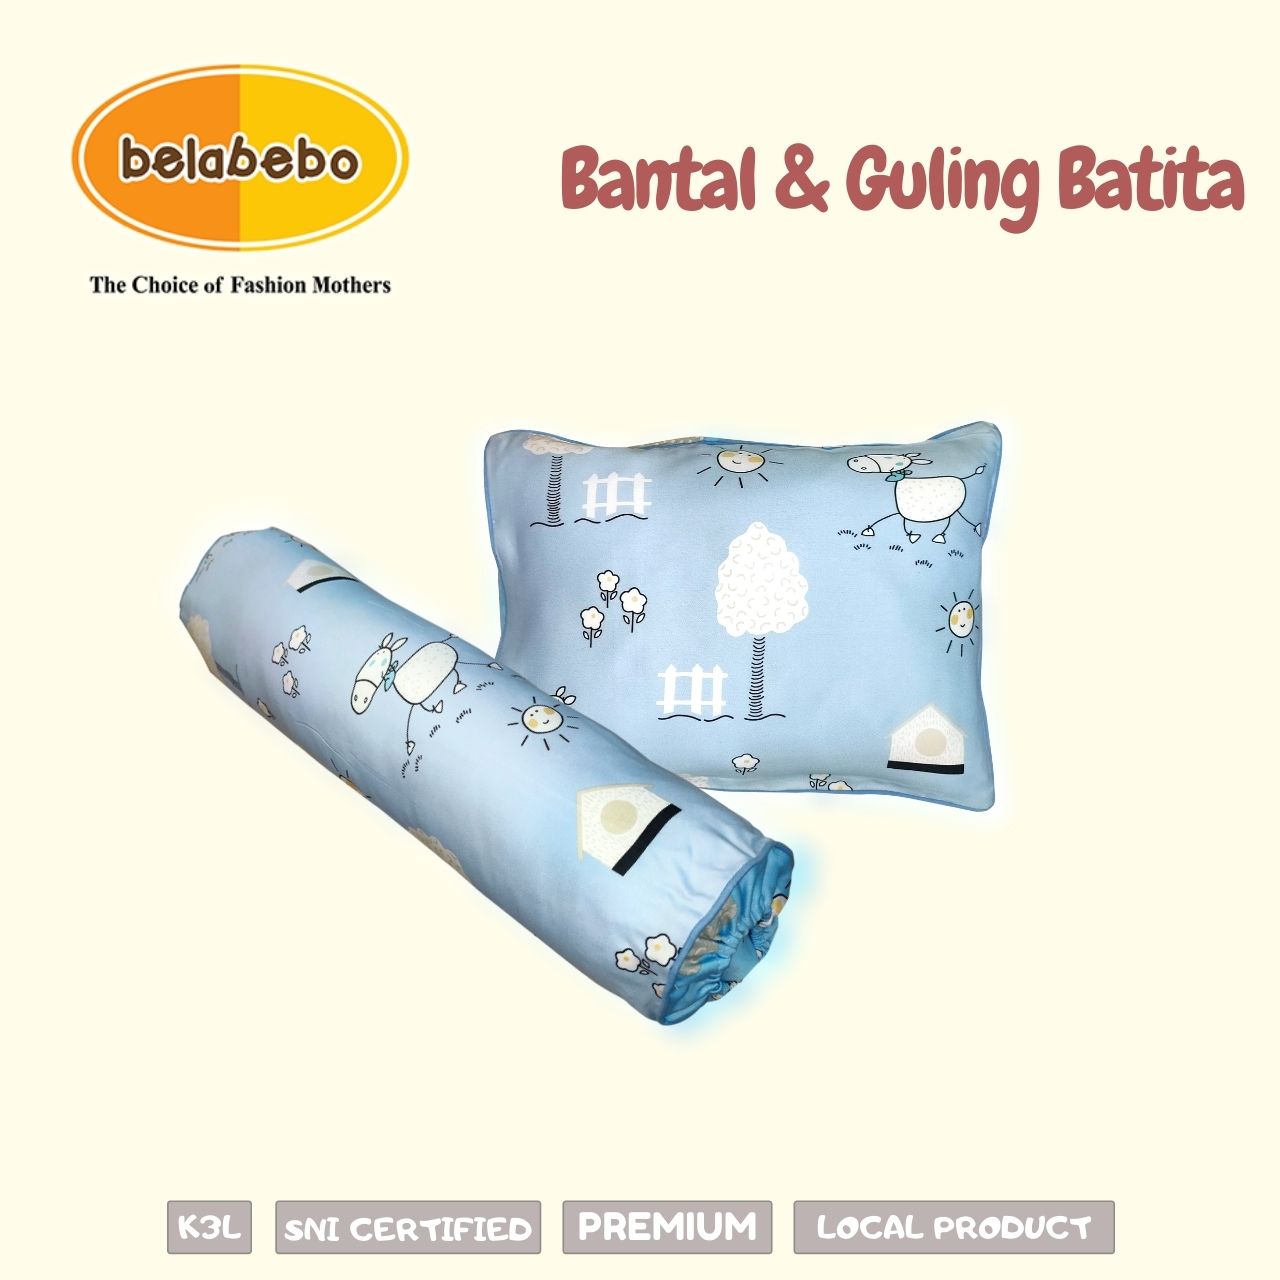 Bantal guling batita